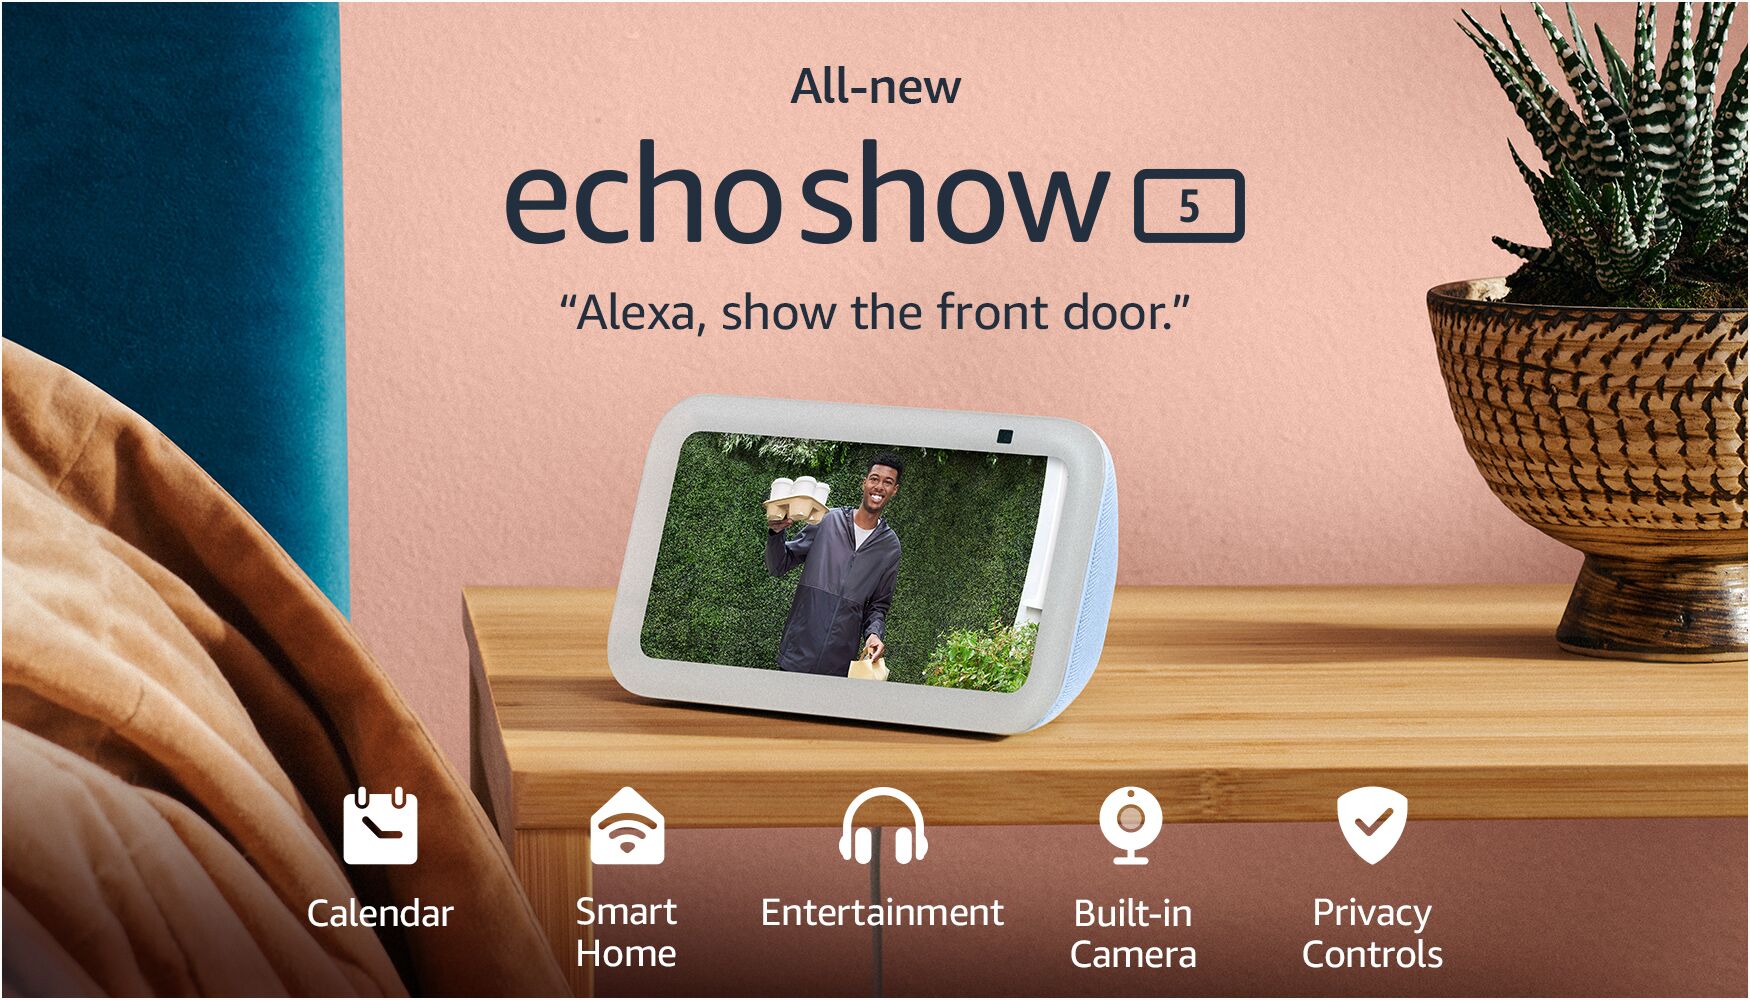  Echo show